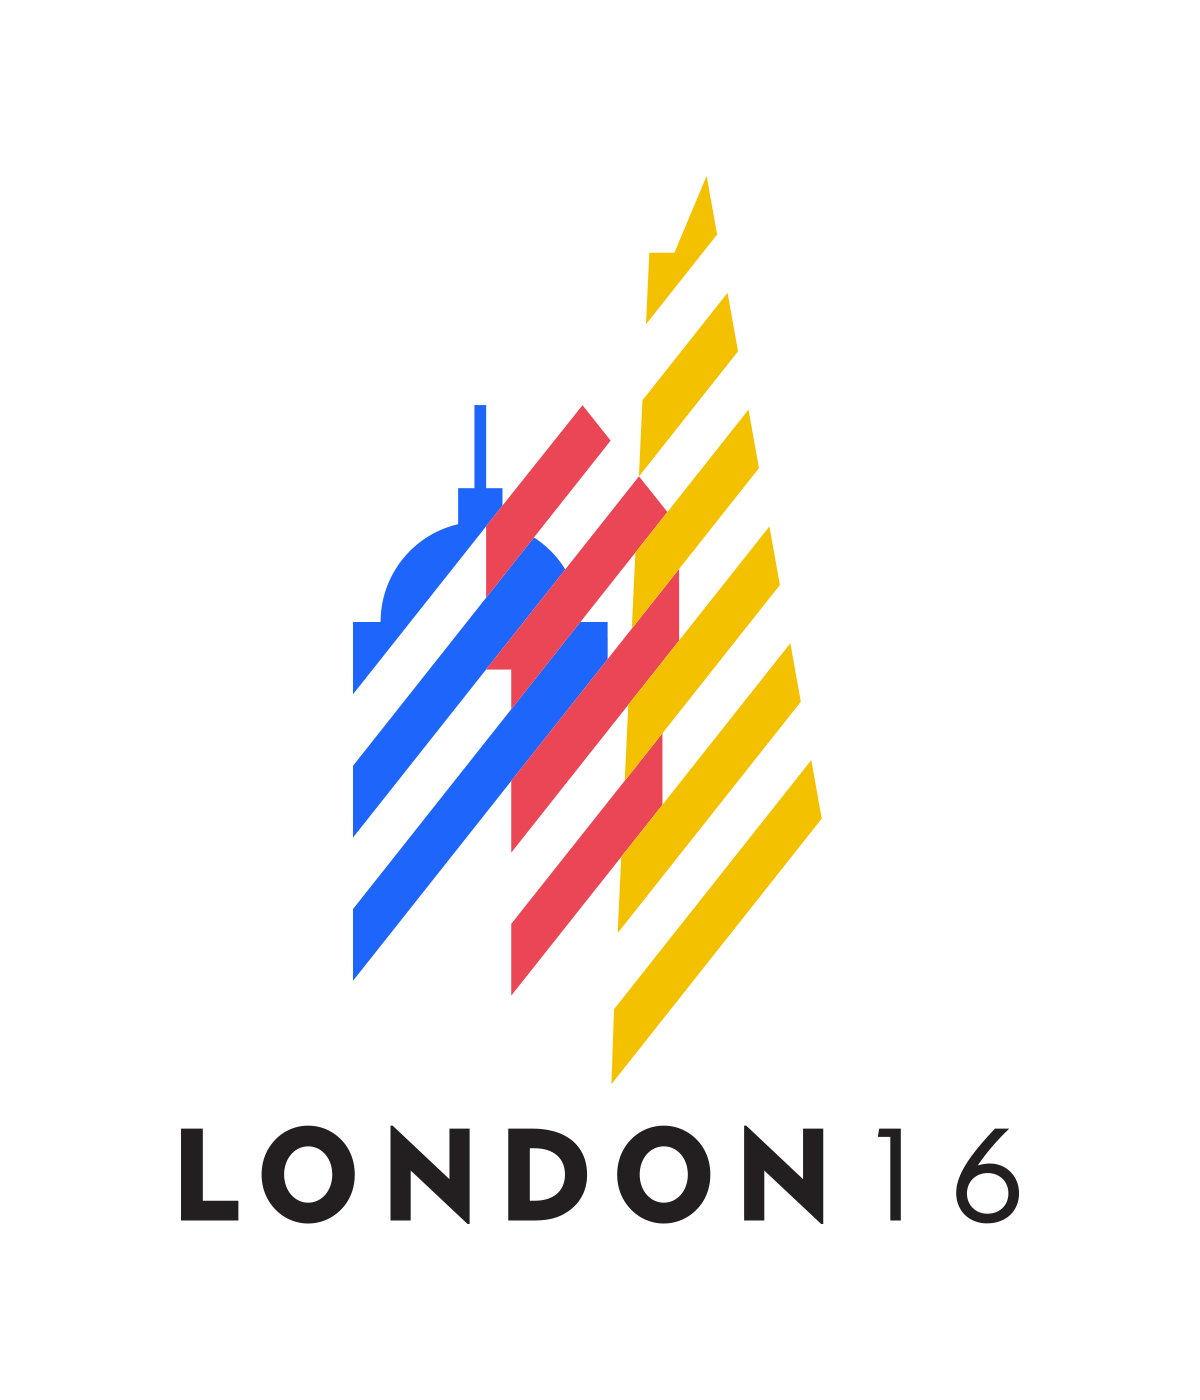 London Logo - EBRD London 2016 logo : Fivefootsix